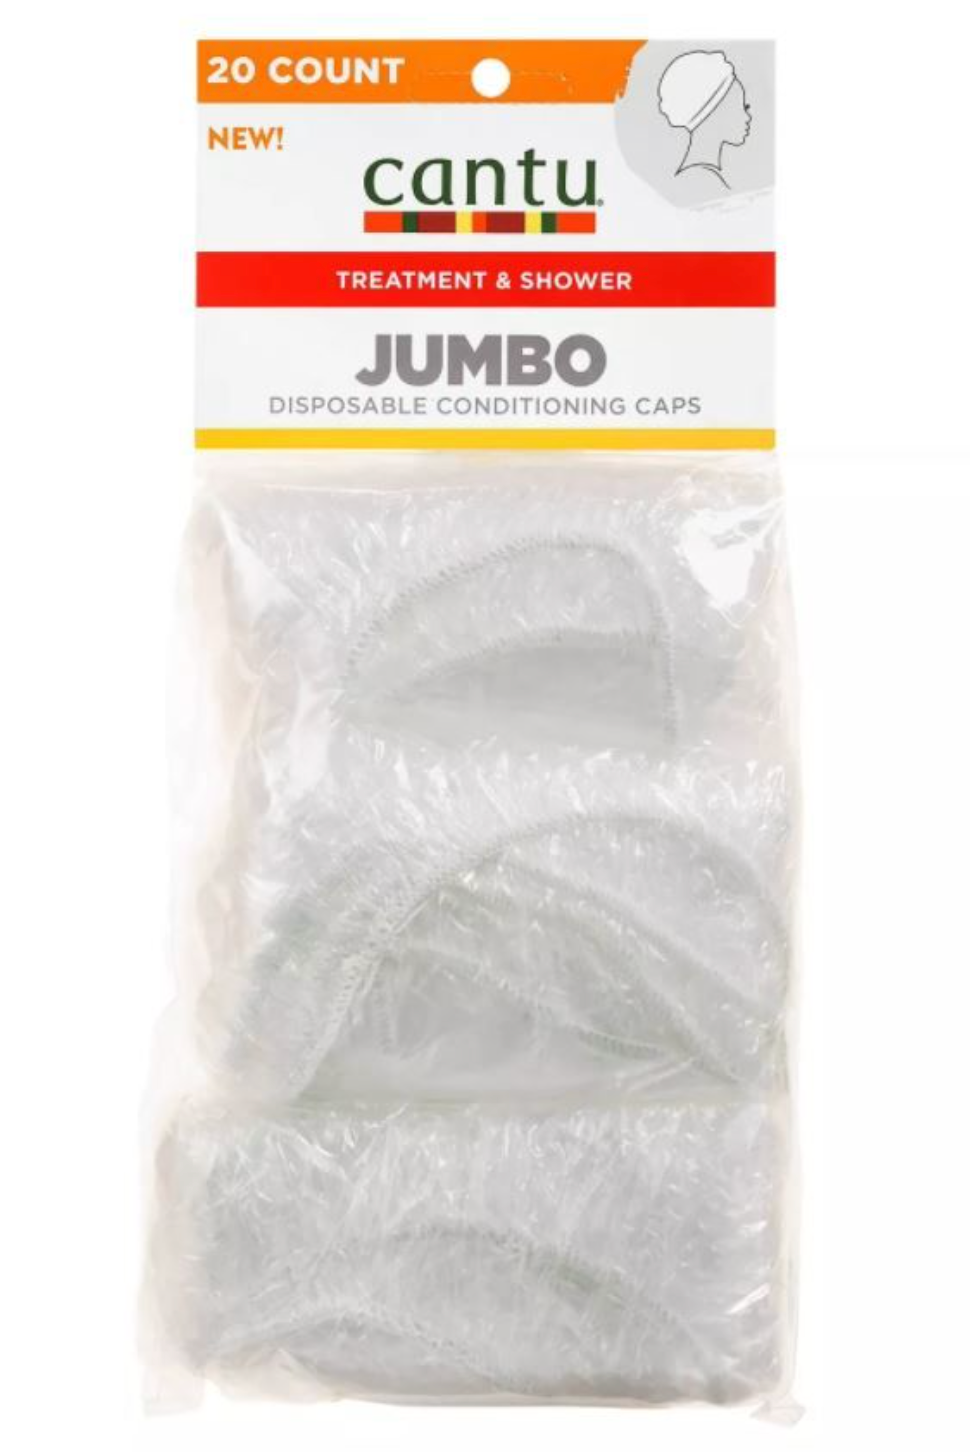 Cantu - Jumbo Disposable Conditioning Caps - 20ct